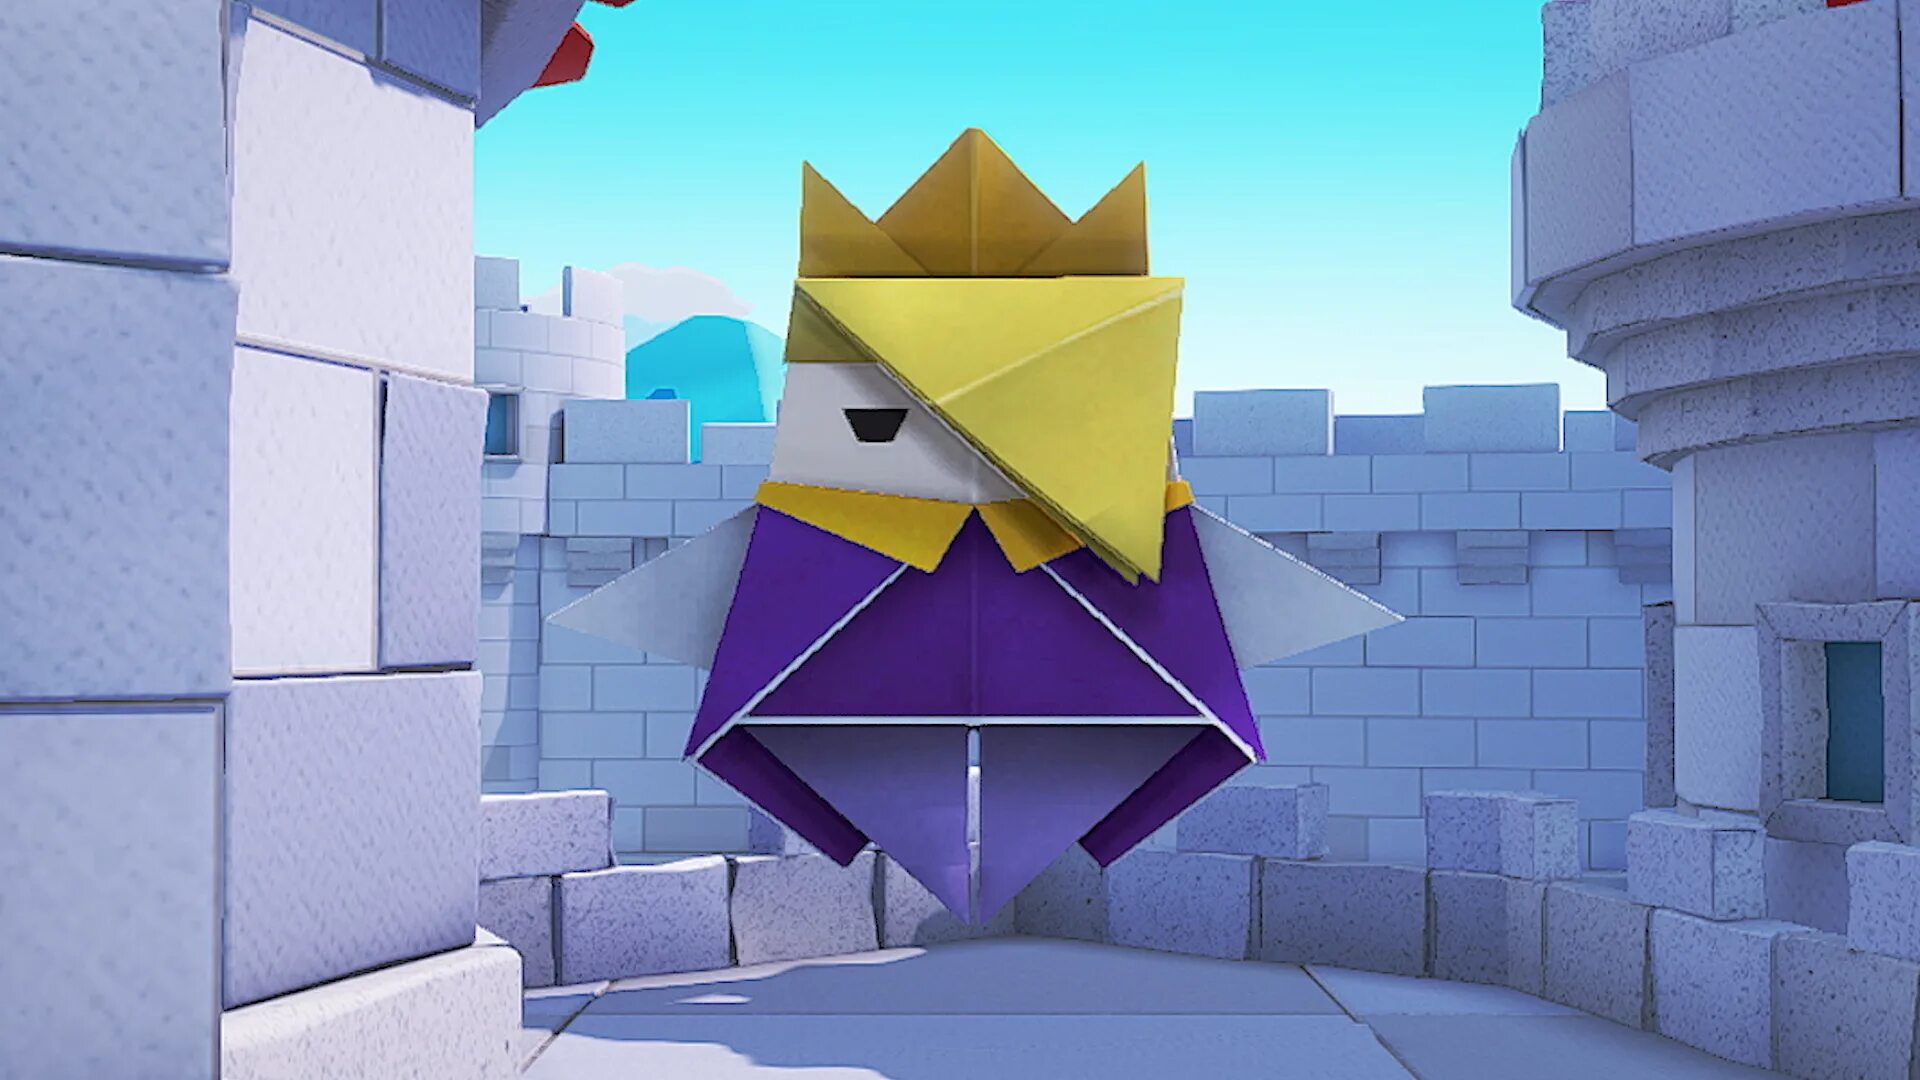 Paper mario origami. Paper Mario Nintendo Switch. Paper Mario Origami King Nintendo Switch. Папер Марио оригами Кинг. Оригами-Король Олли Марио.